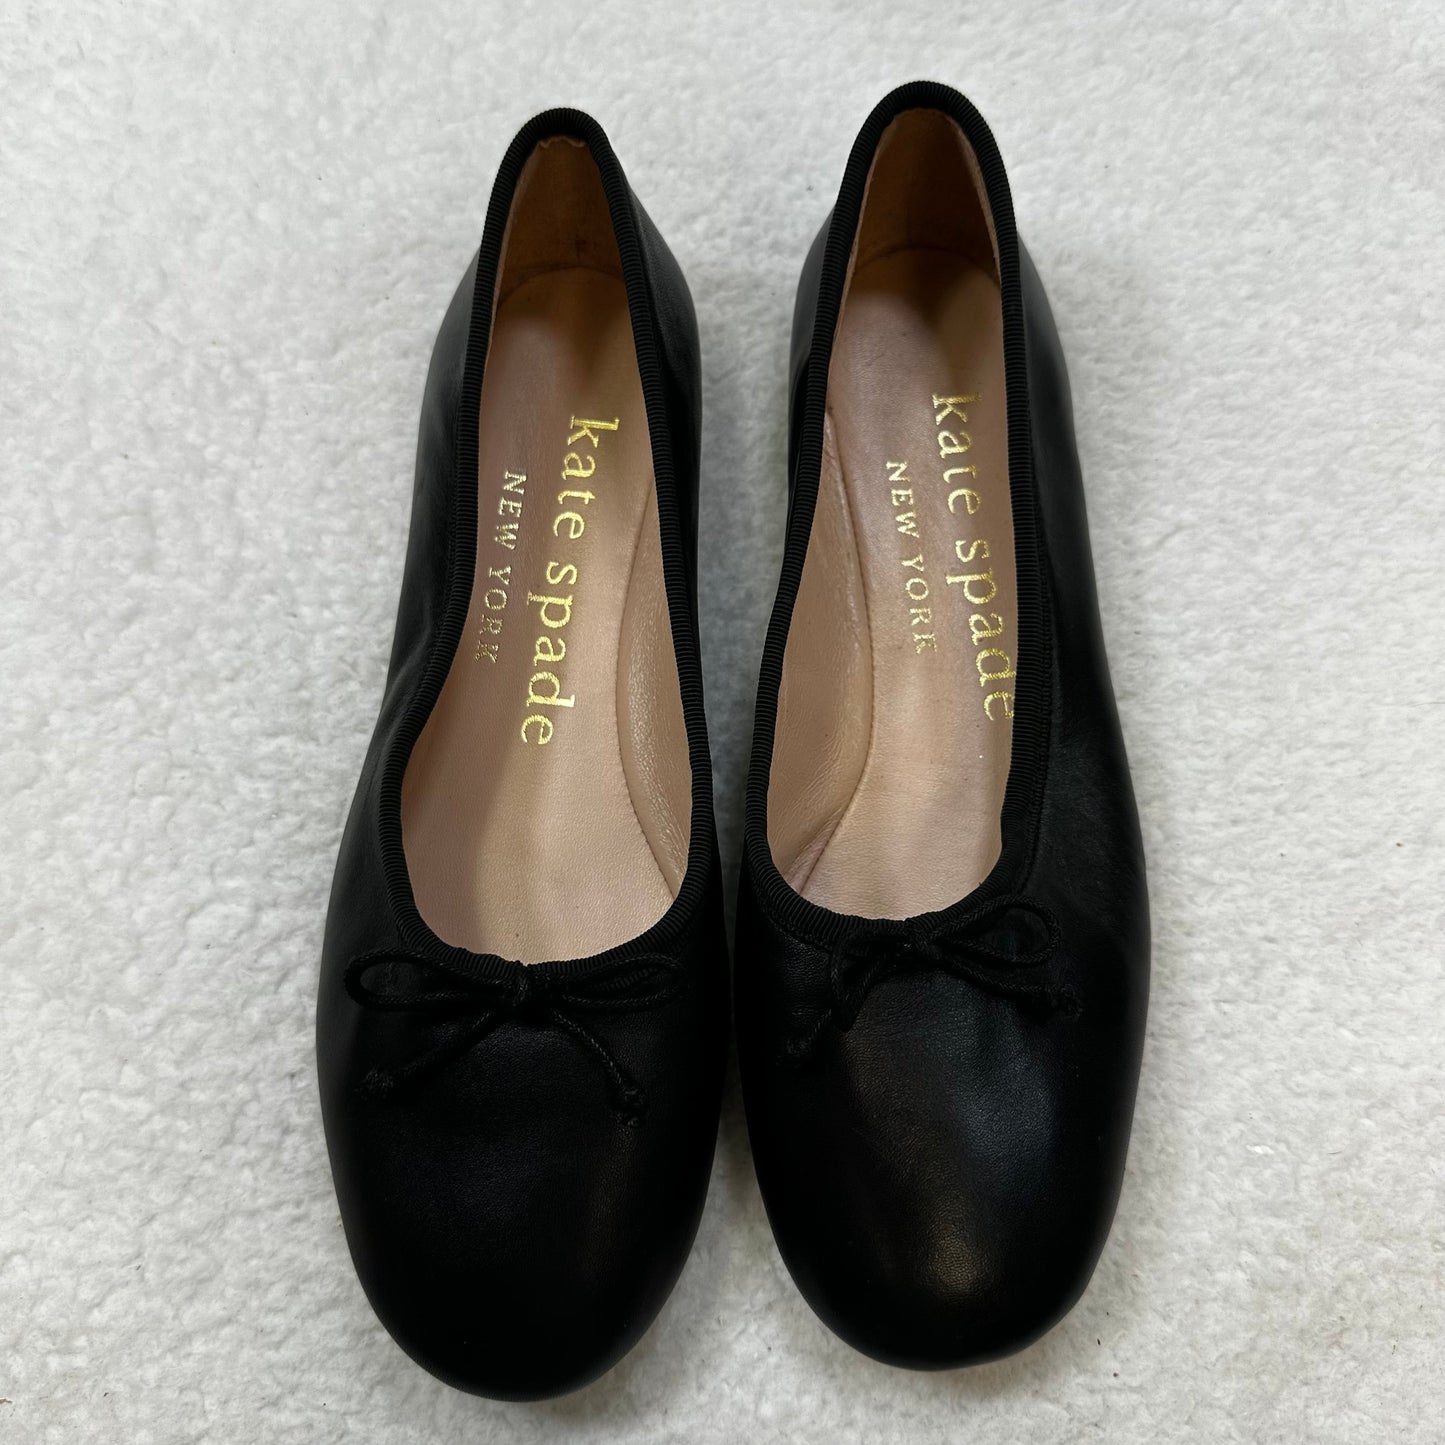 Black Shoes Flats Ballet Kate Spade, Size 7.5